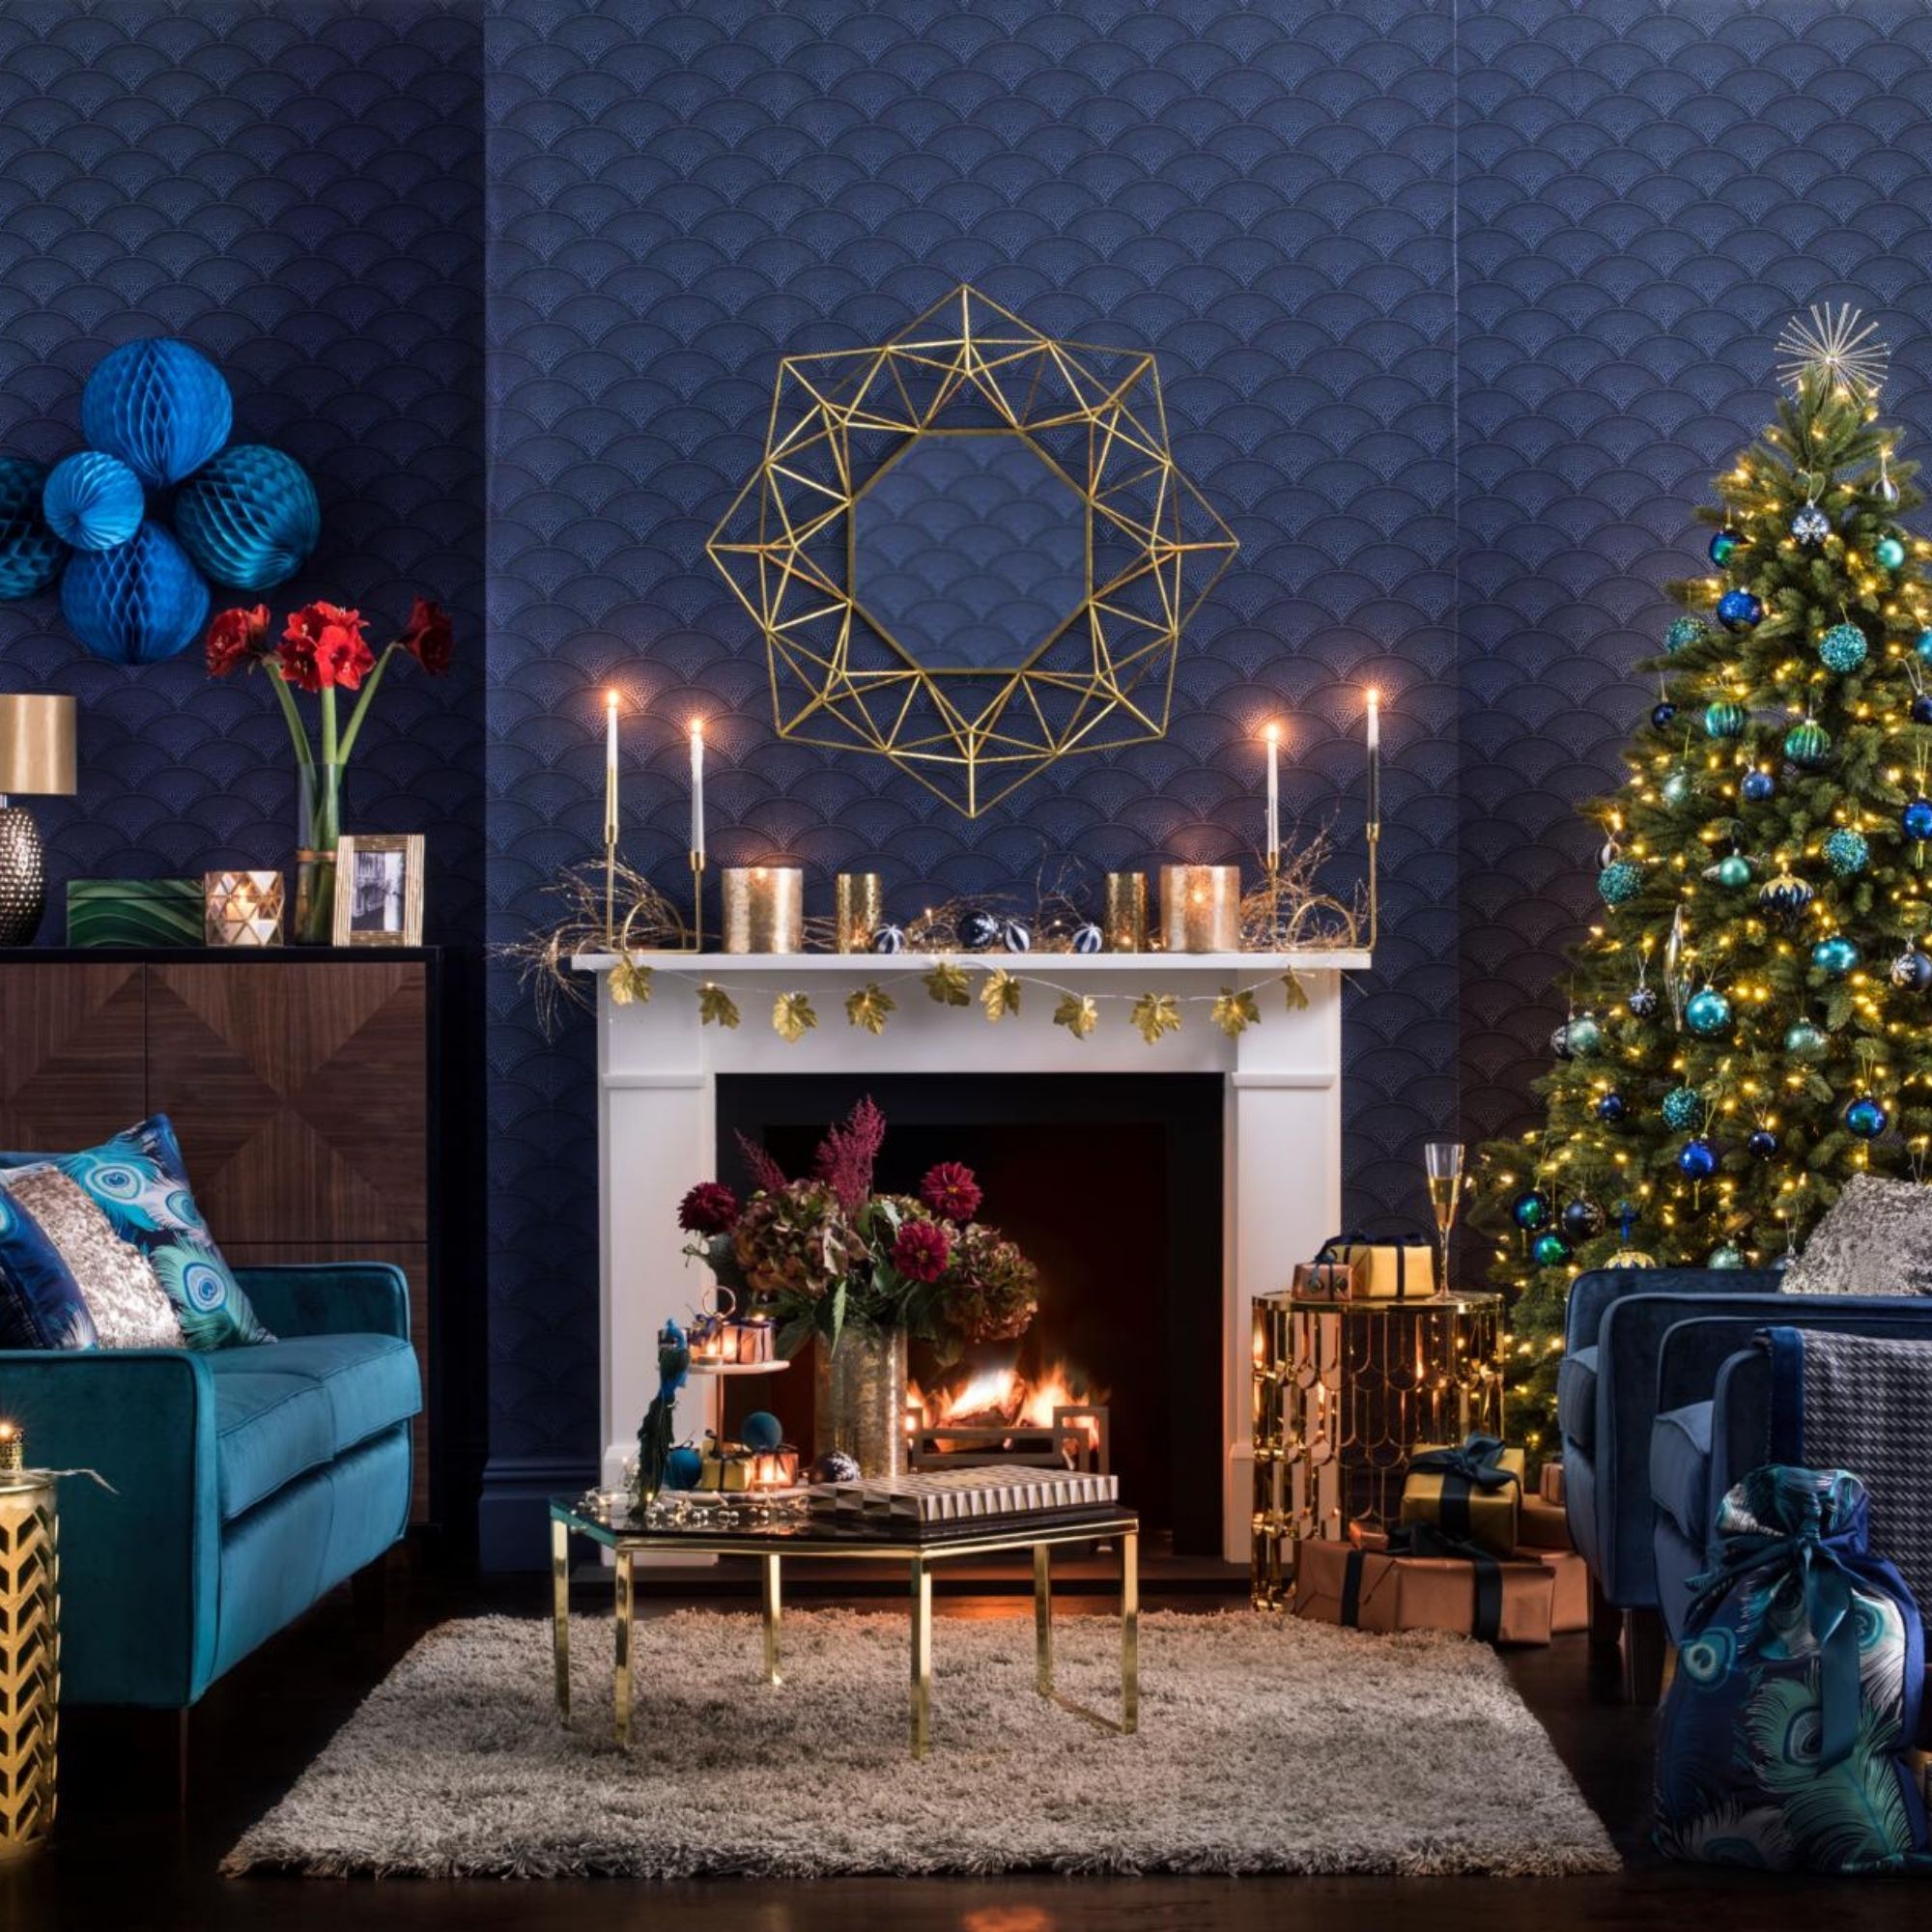 70 Amazing Nordic-inspired Christmas decor ideas